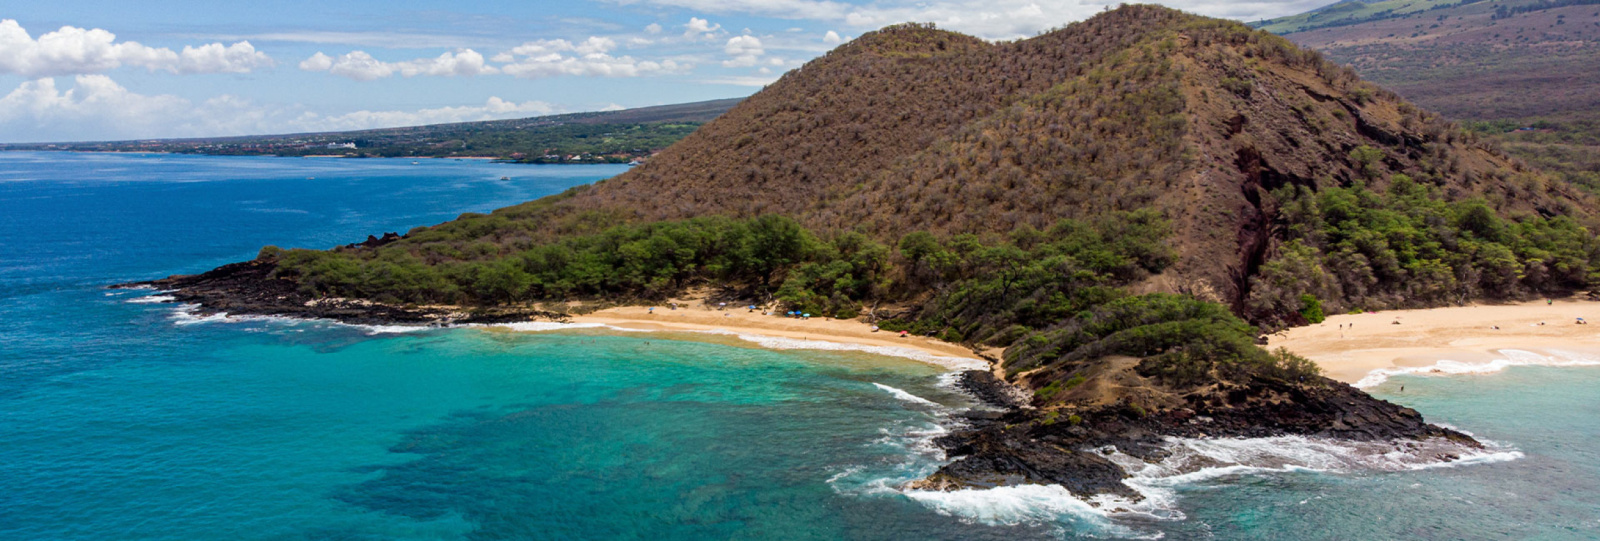 dan hauenstein recommends Little Beach Maui Pics